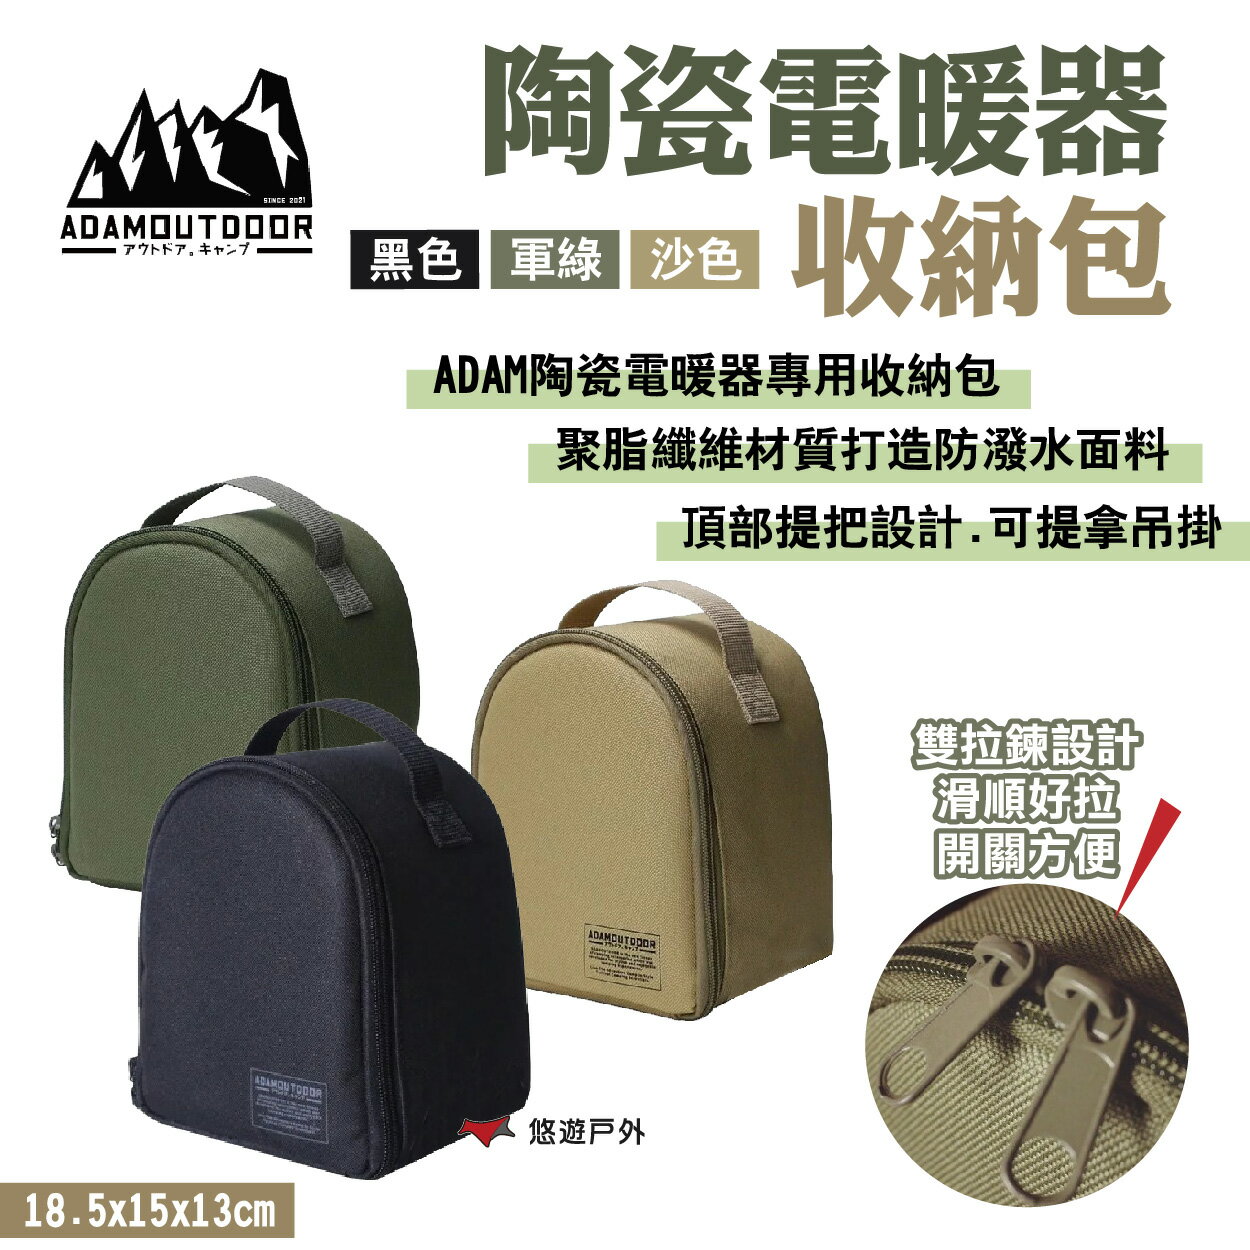 【ADAMOUTDOOR】陶瓷電暖器收納包 軍綠/沙色/黑色 手提包 保護袋 電暖器提袋 露營 悠遊戶外